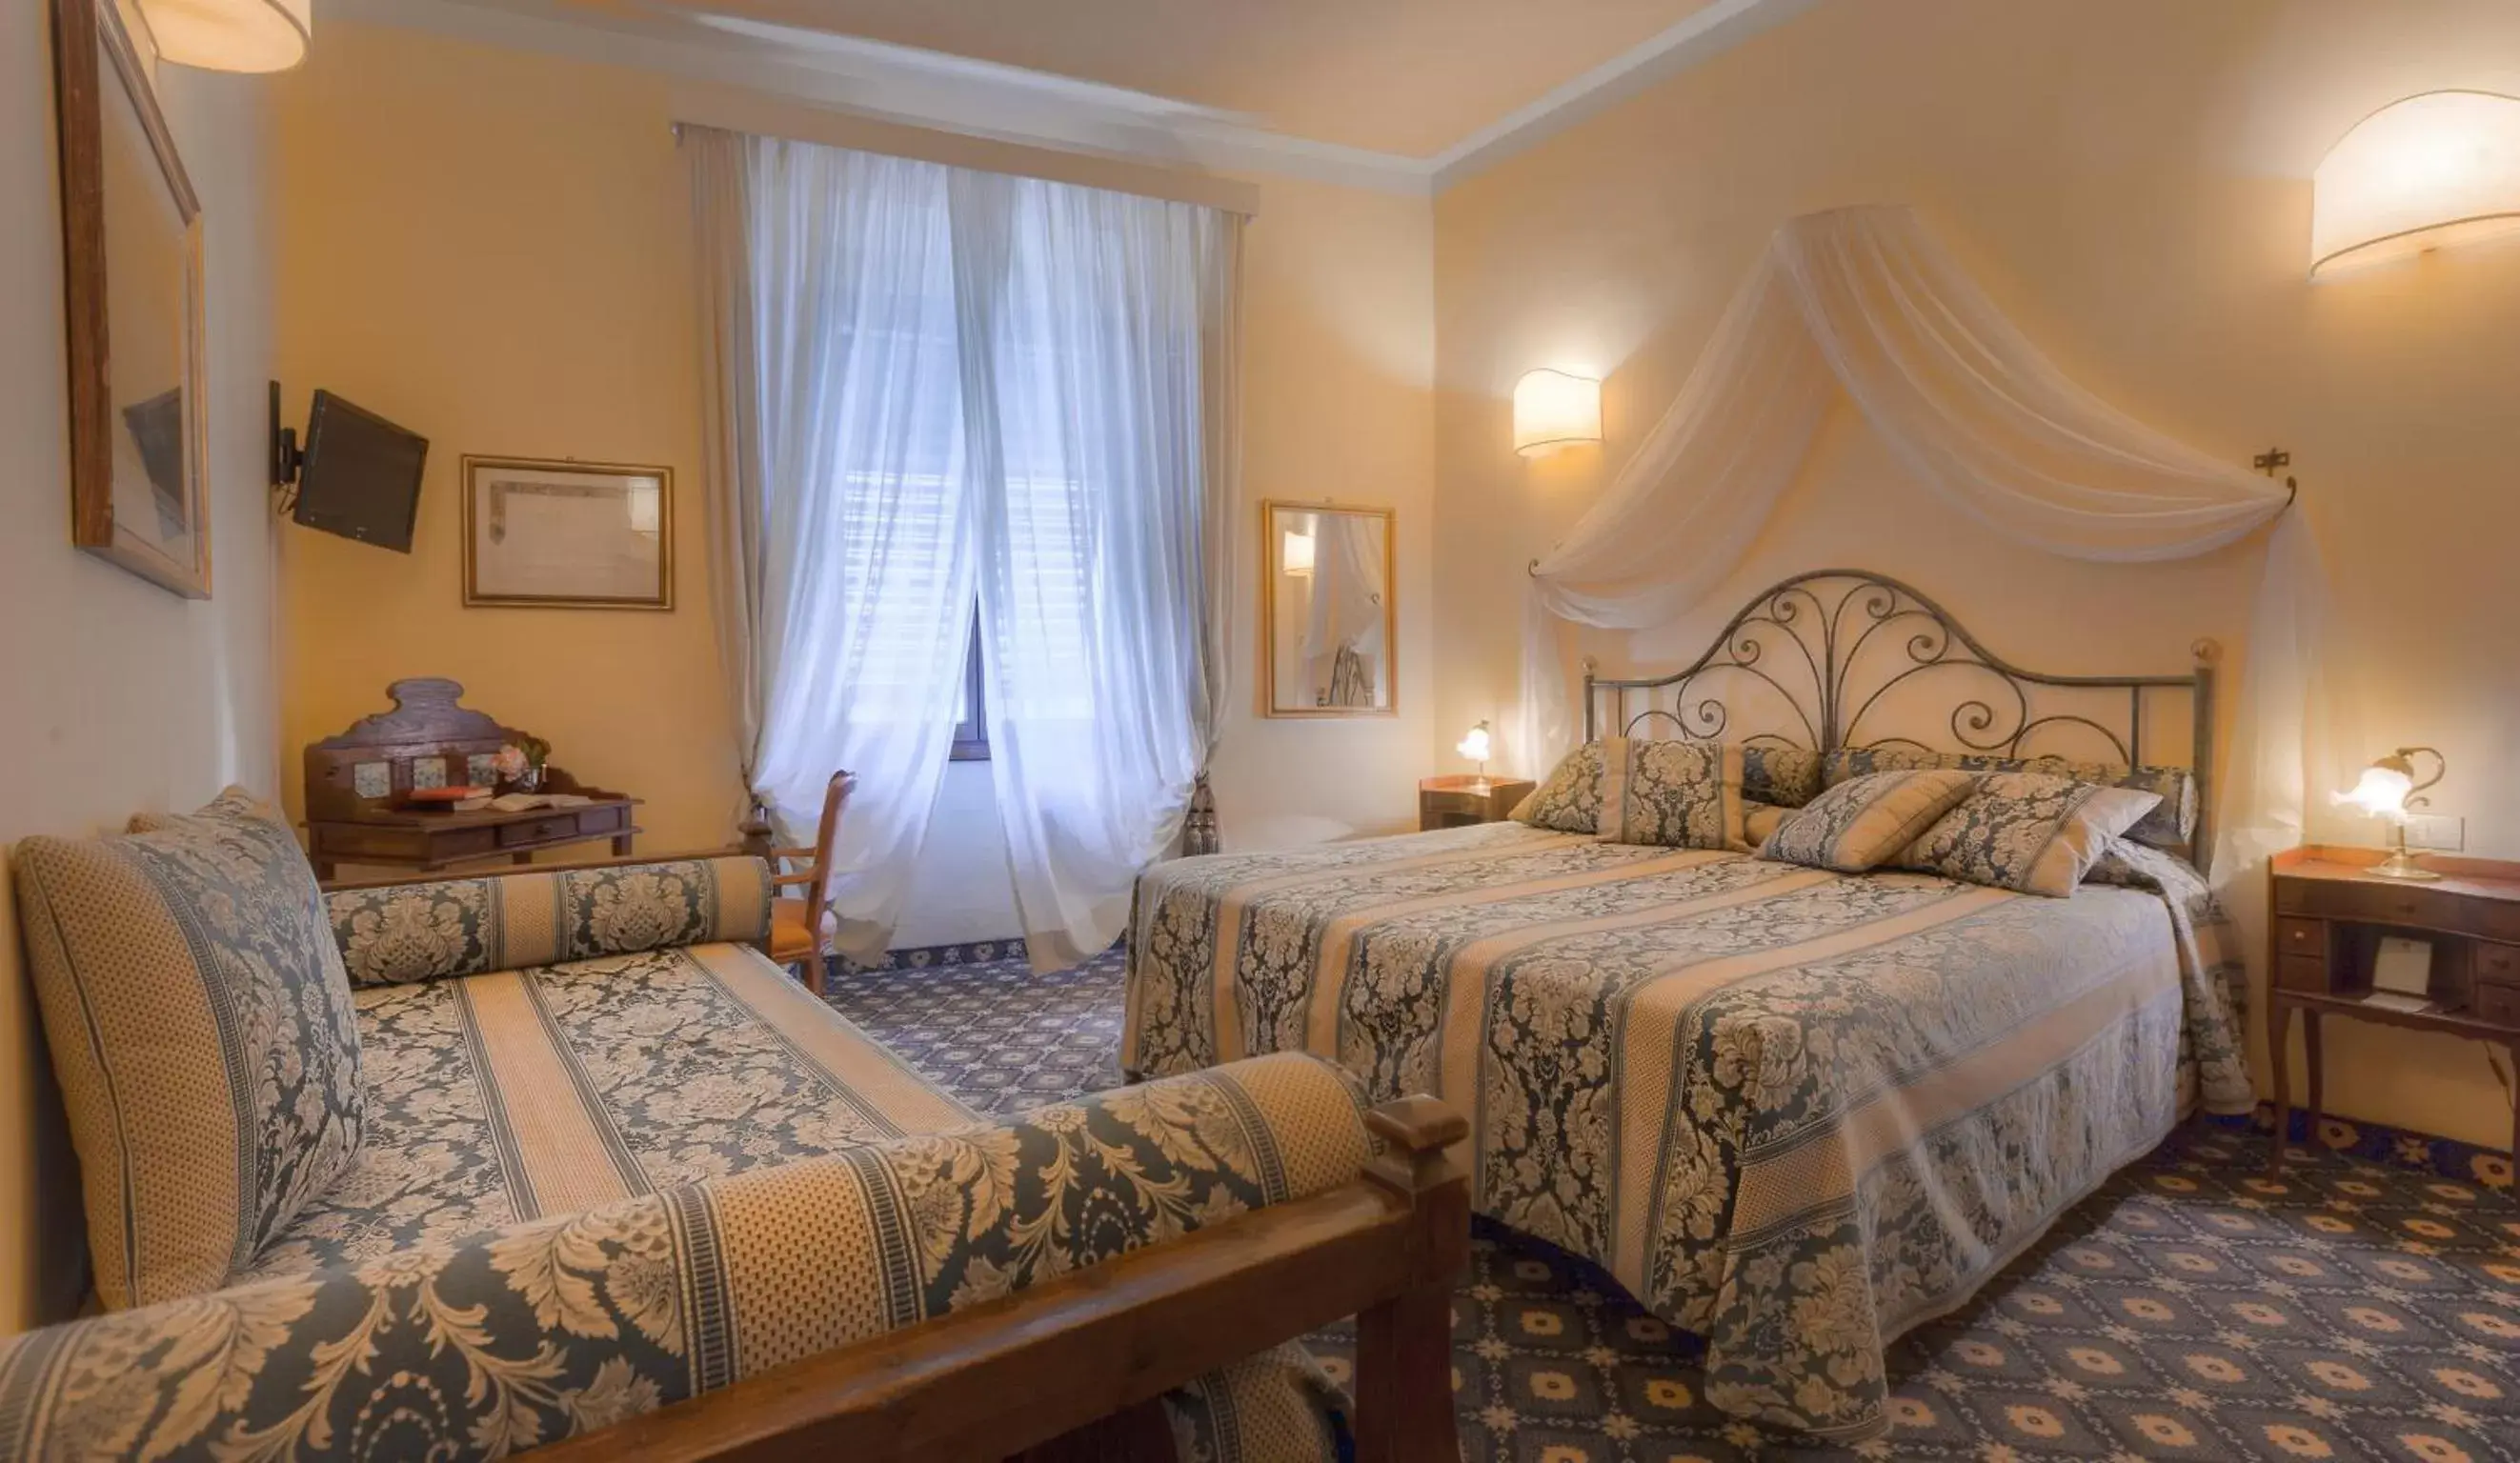 Bed, Room Photo in Hotel Palazzo dal Borgo